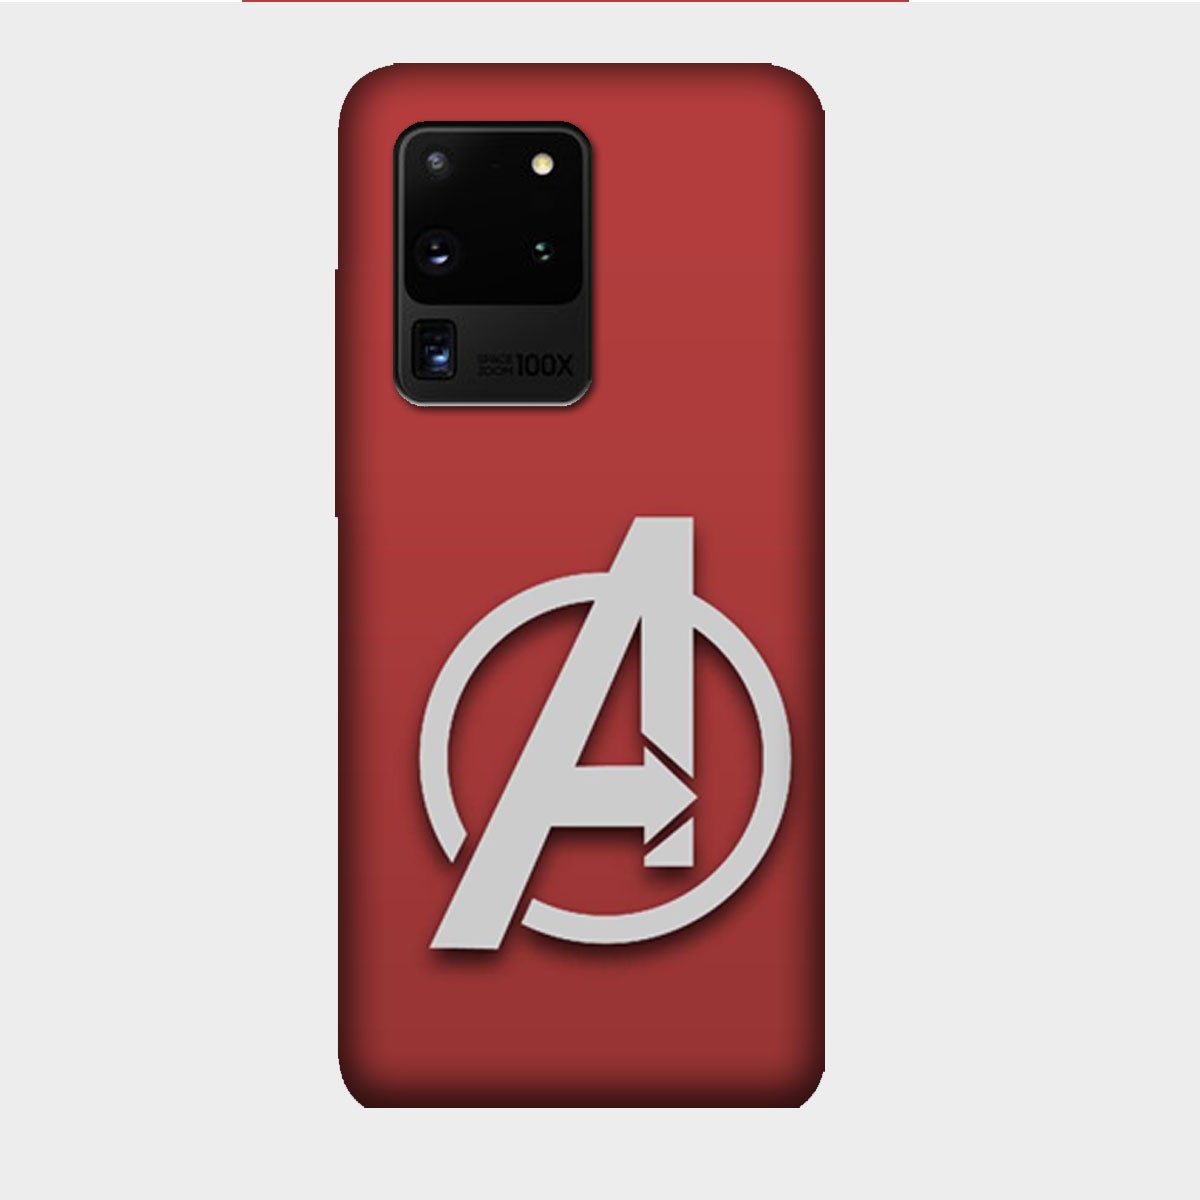 Avenger - Red - Mobile Phone Cover - Hard Case - Samsung - Samsung